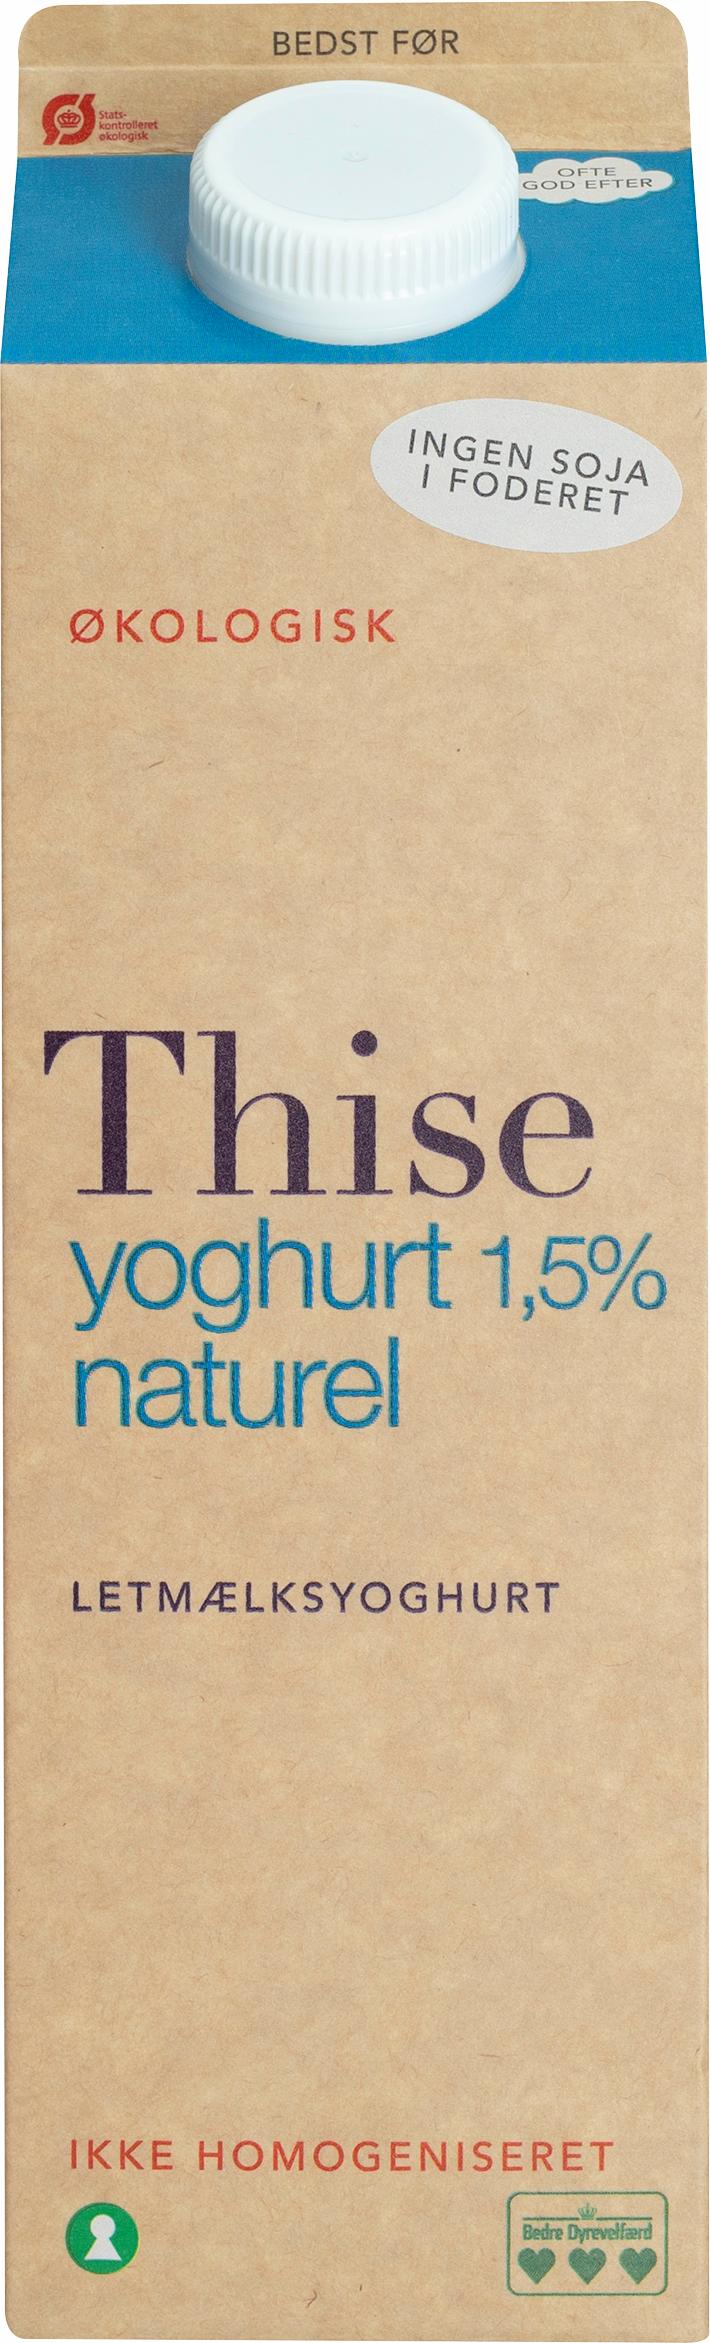 Thise Yoghurt Naturel 1,5% 1000g